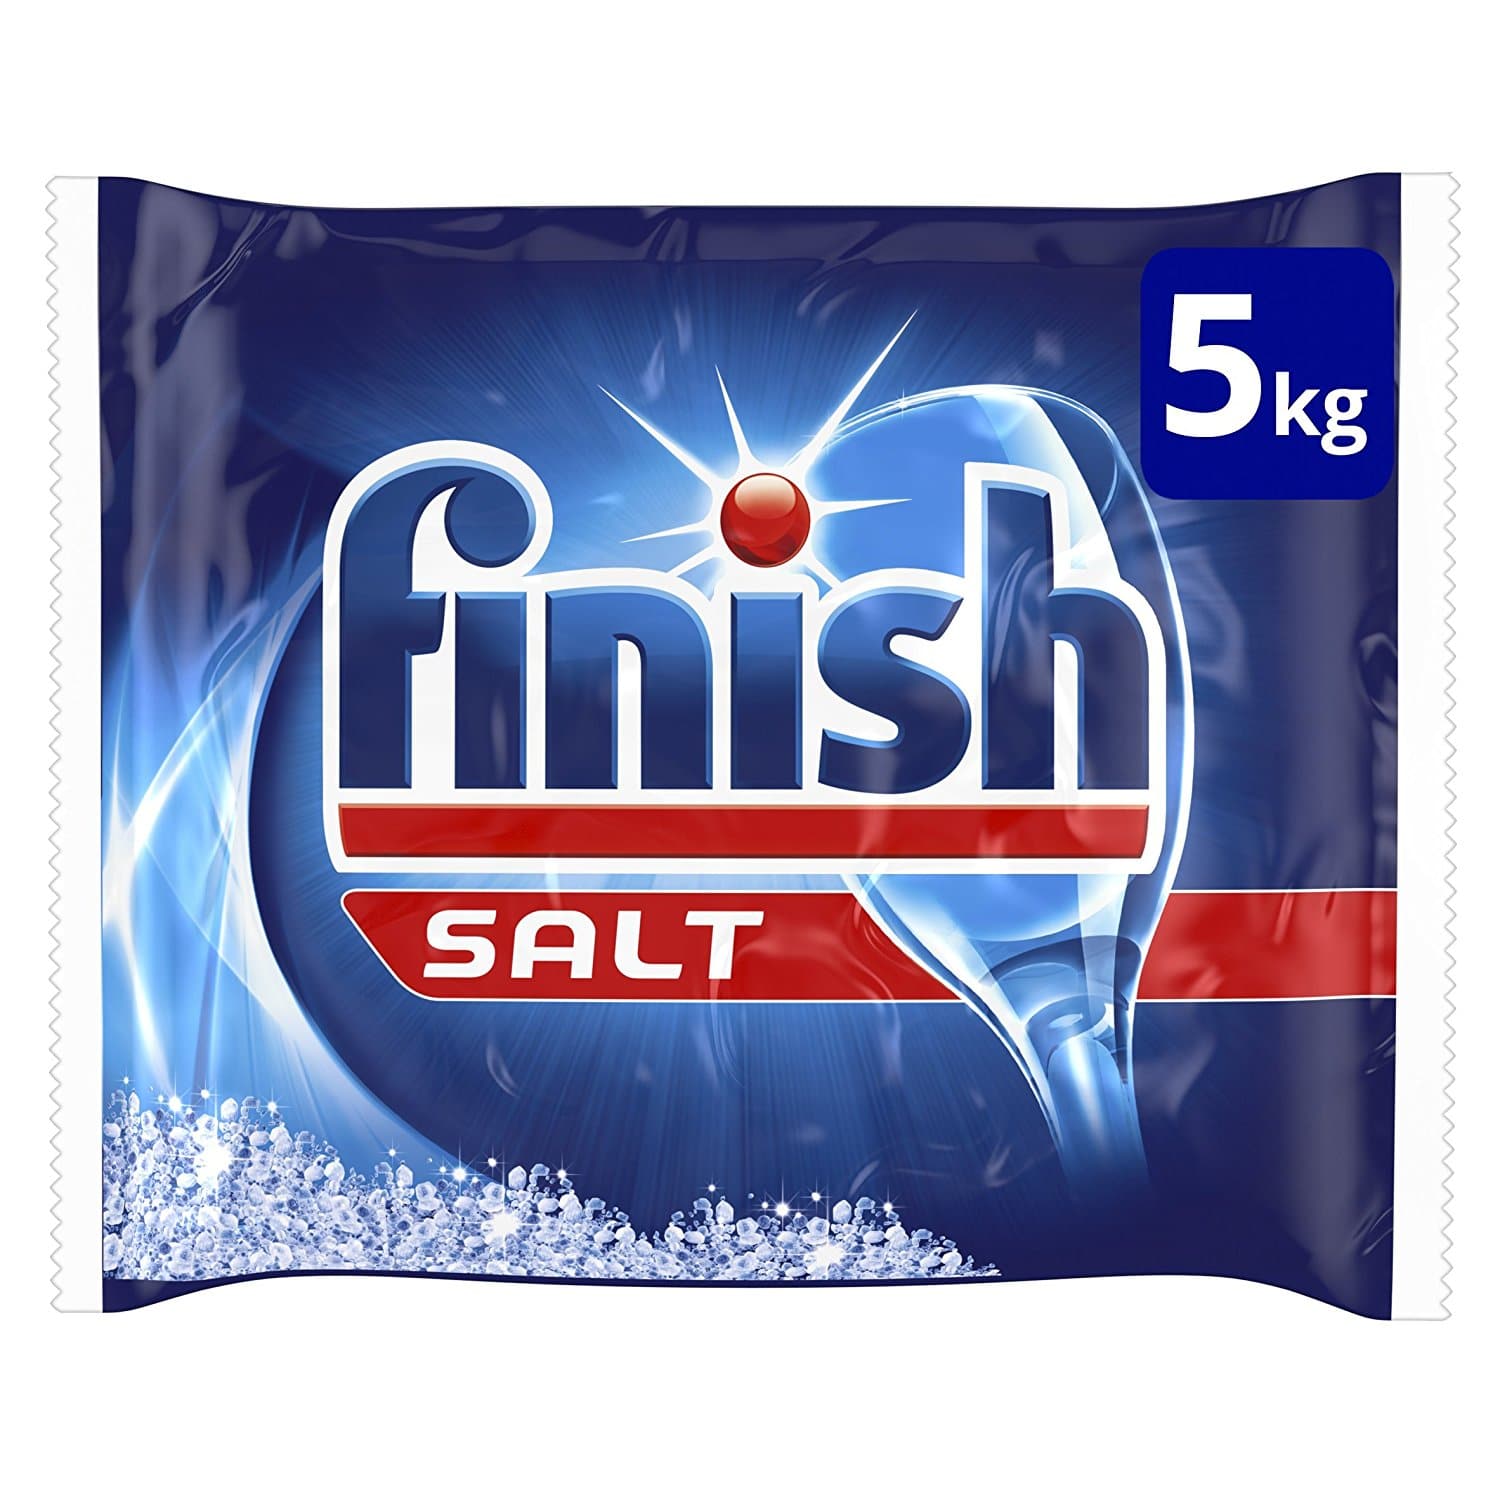 where to buy dishwasher salt